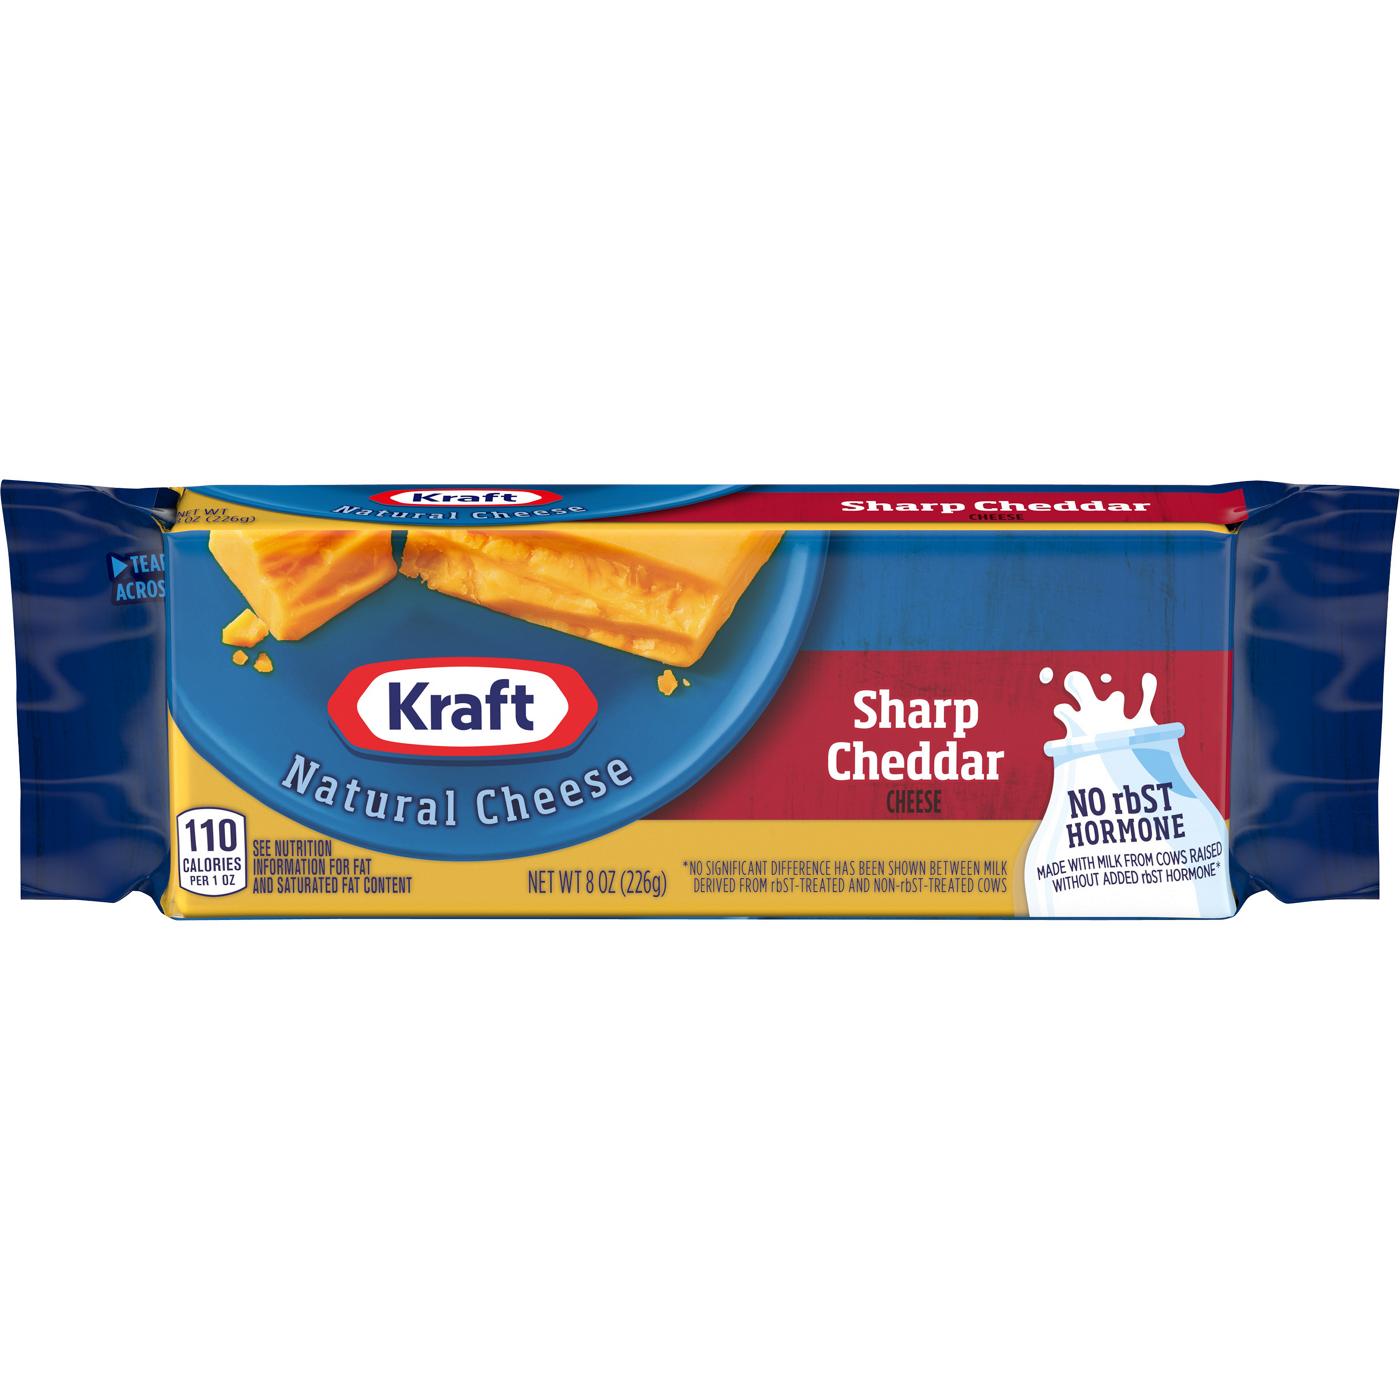 Kraft Sharp Cheddar Cheese; image 1 of 3